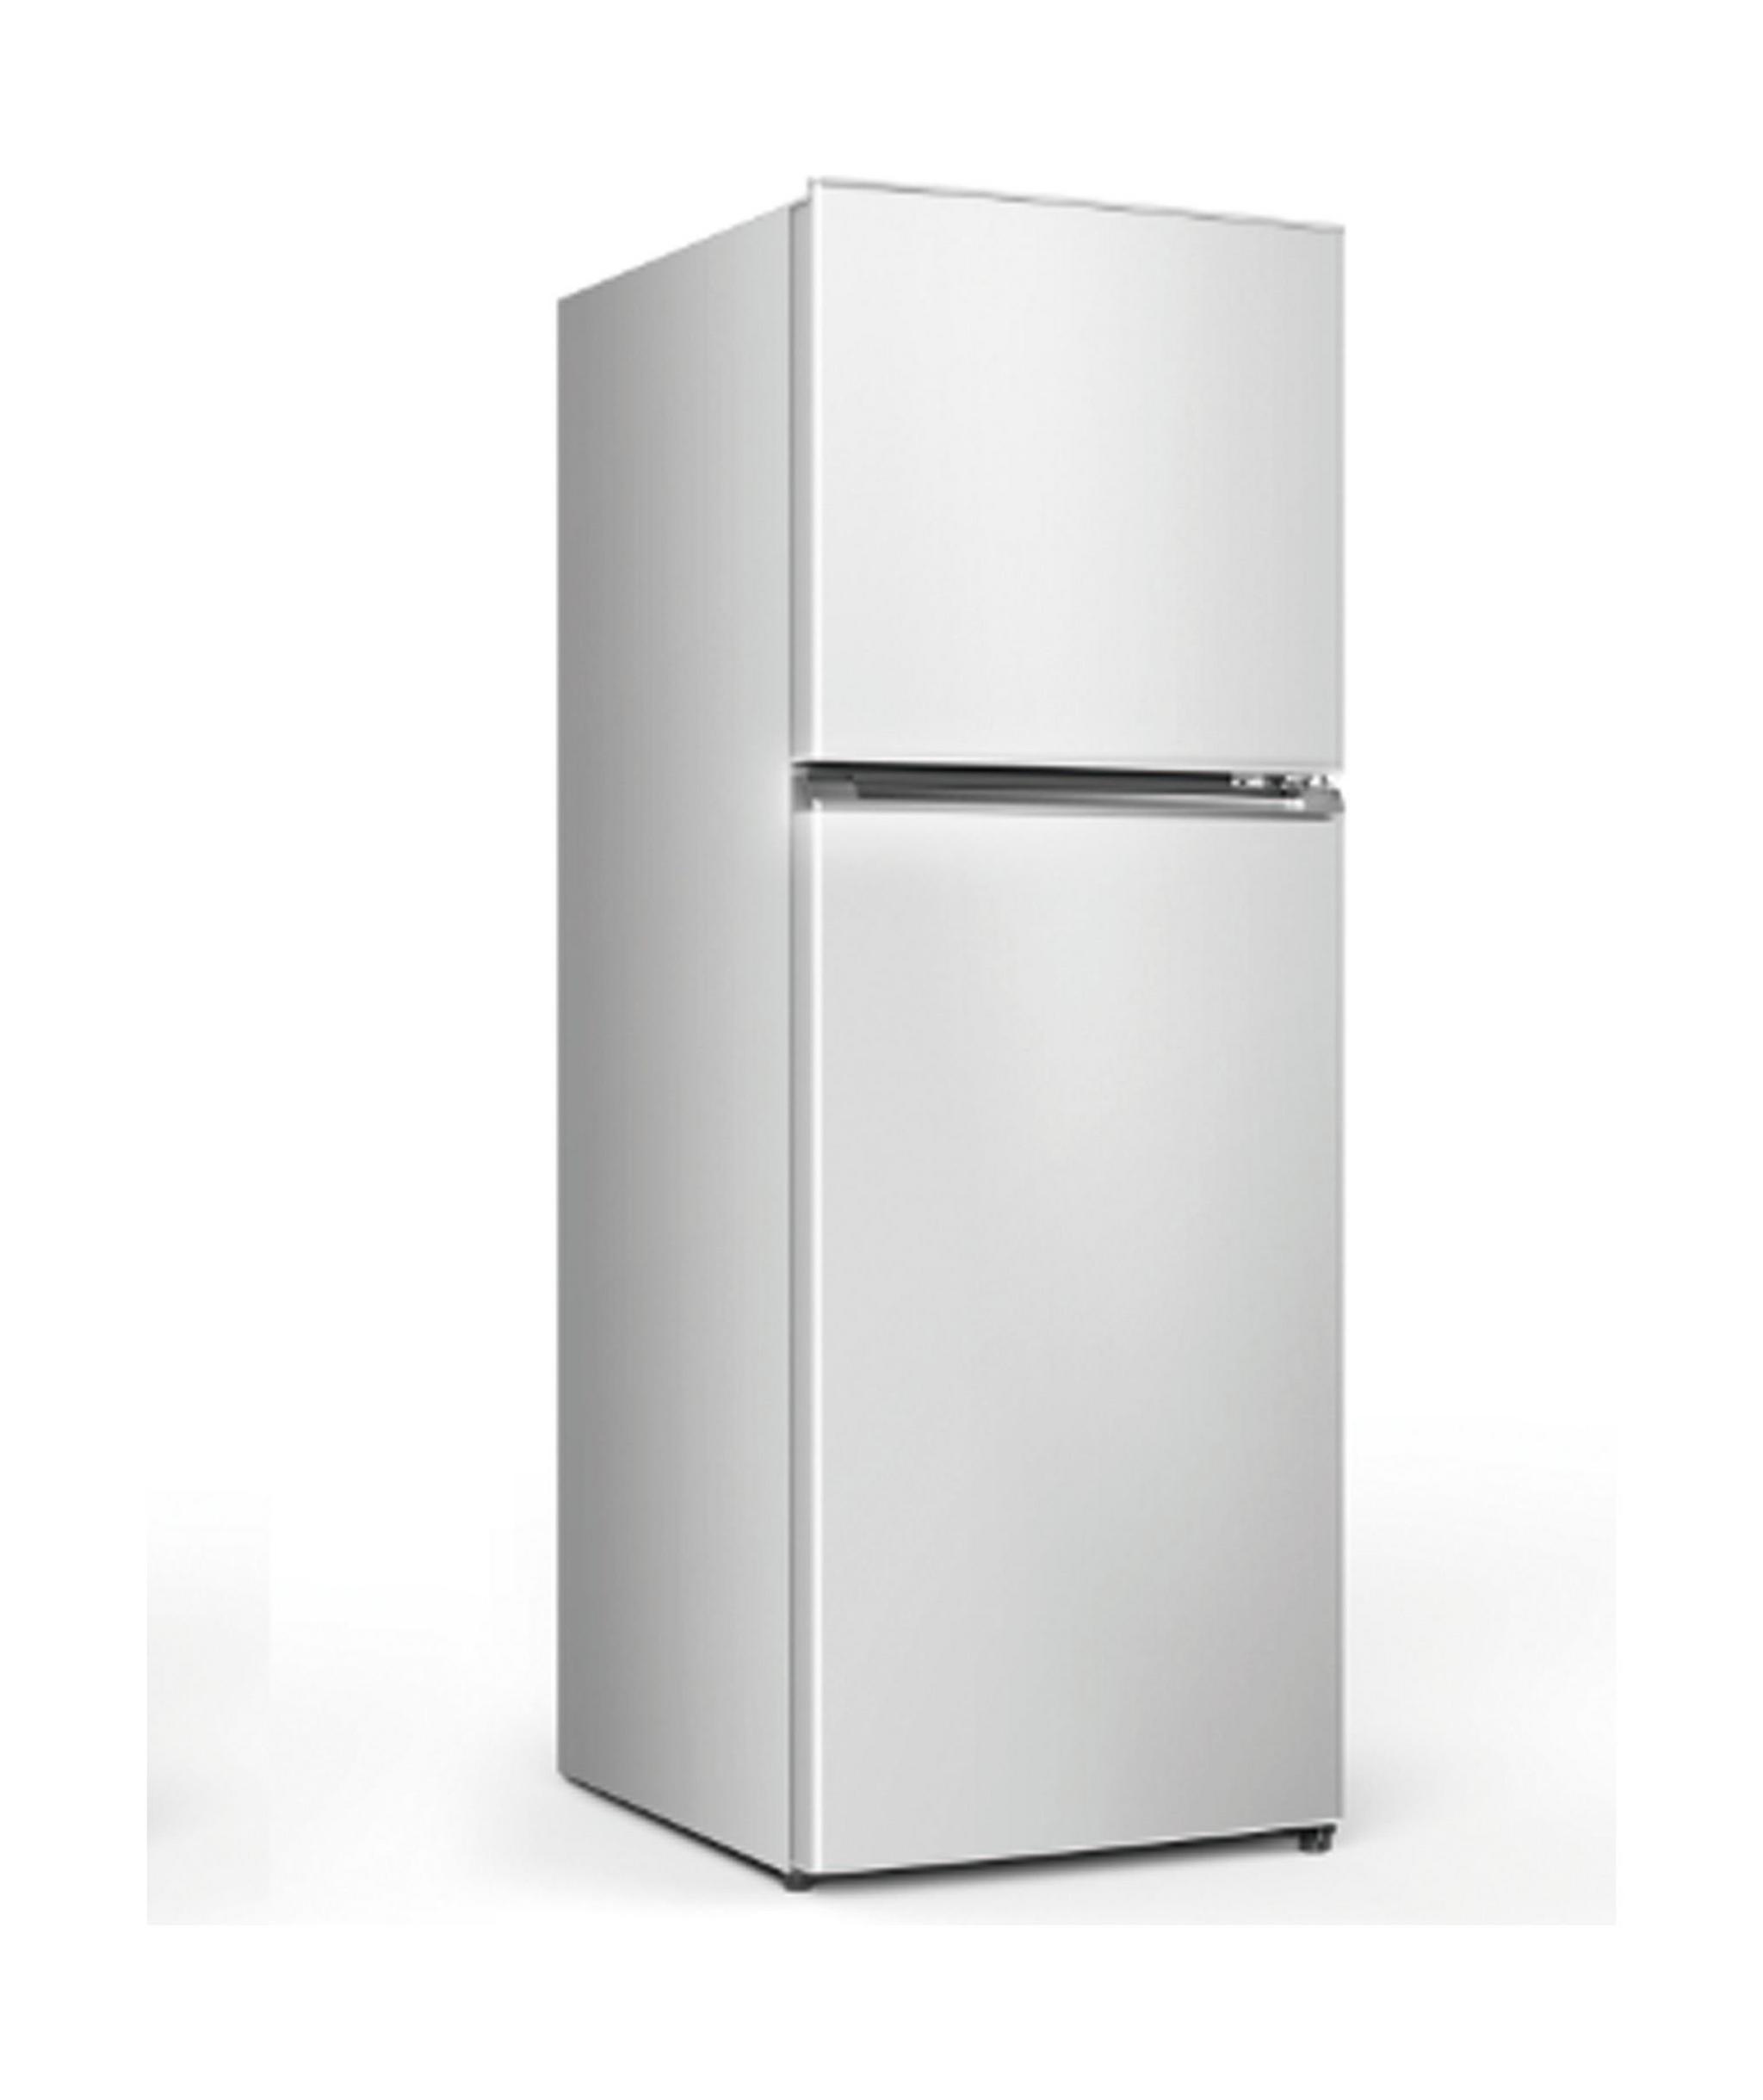 Wansa 9 Cft. Top Mount Refrigerator (WRTG-255-NFWTC62) – White